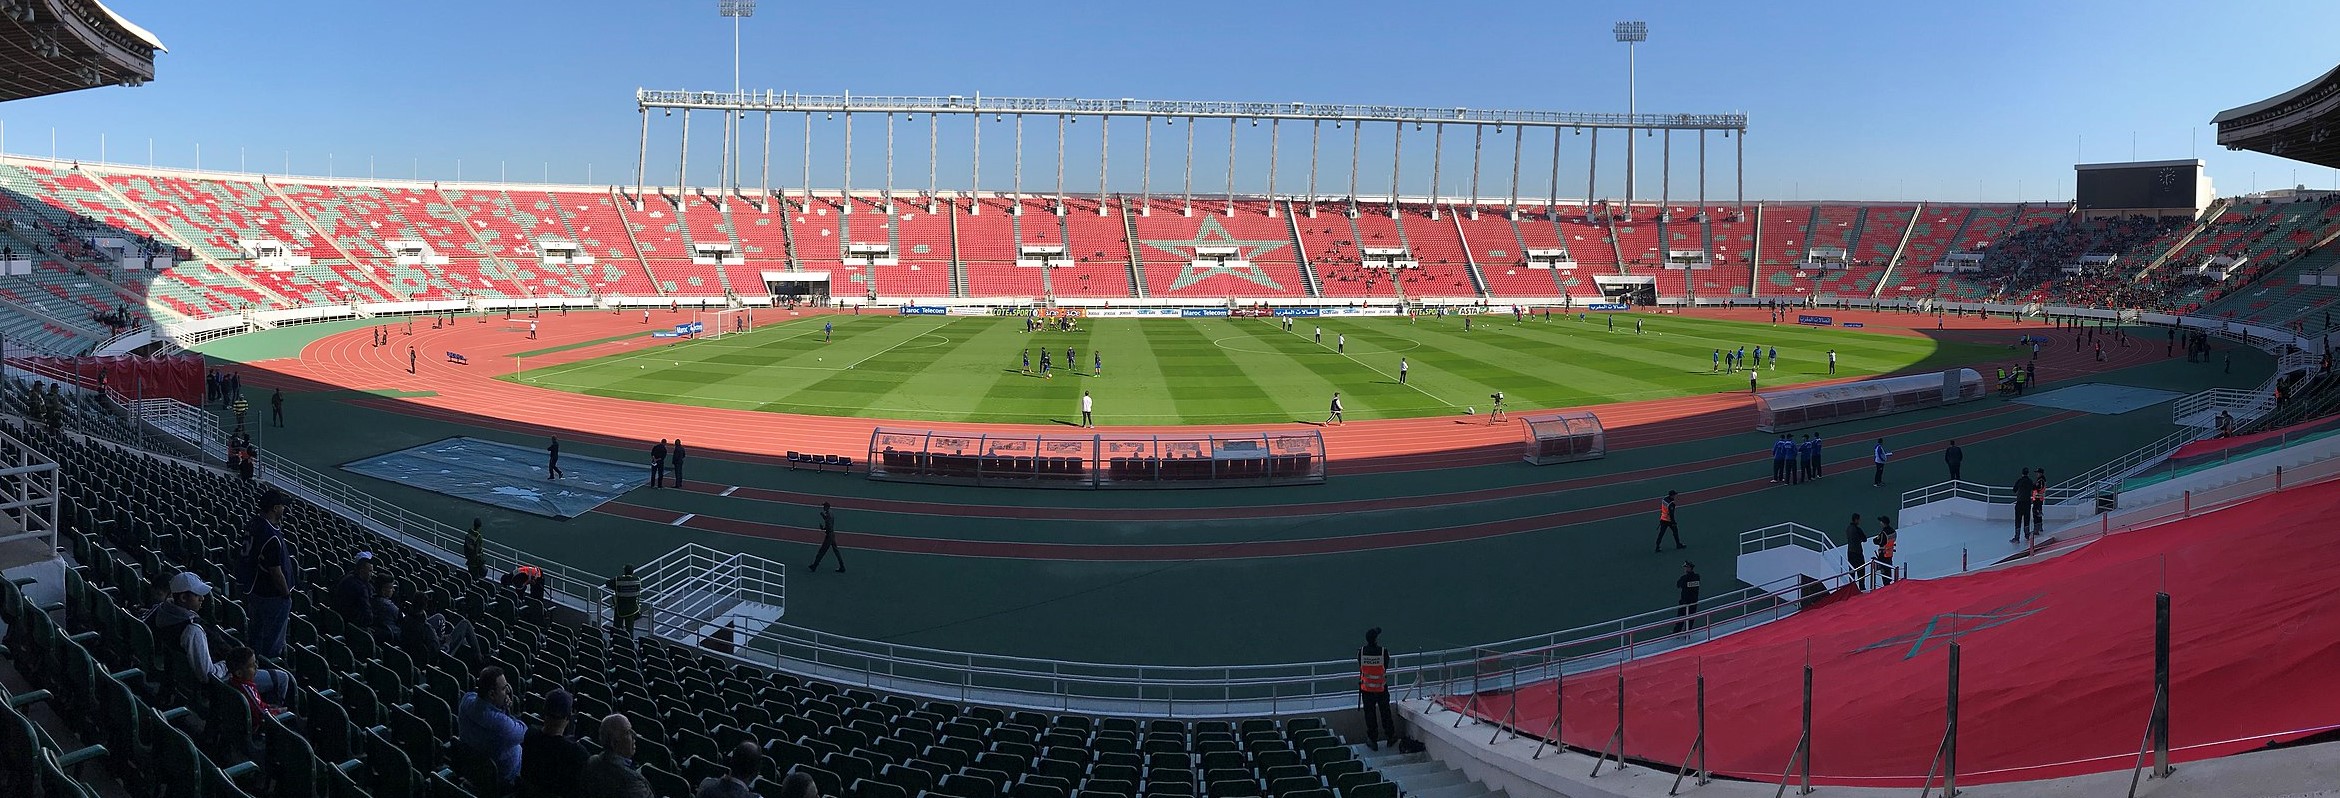 Stade Prince Moulay-Abdallah, Rabat, Maroc